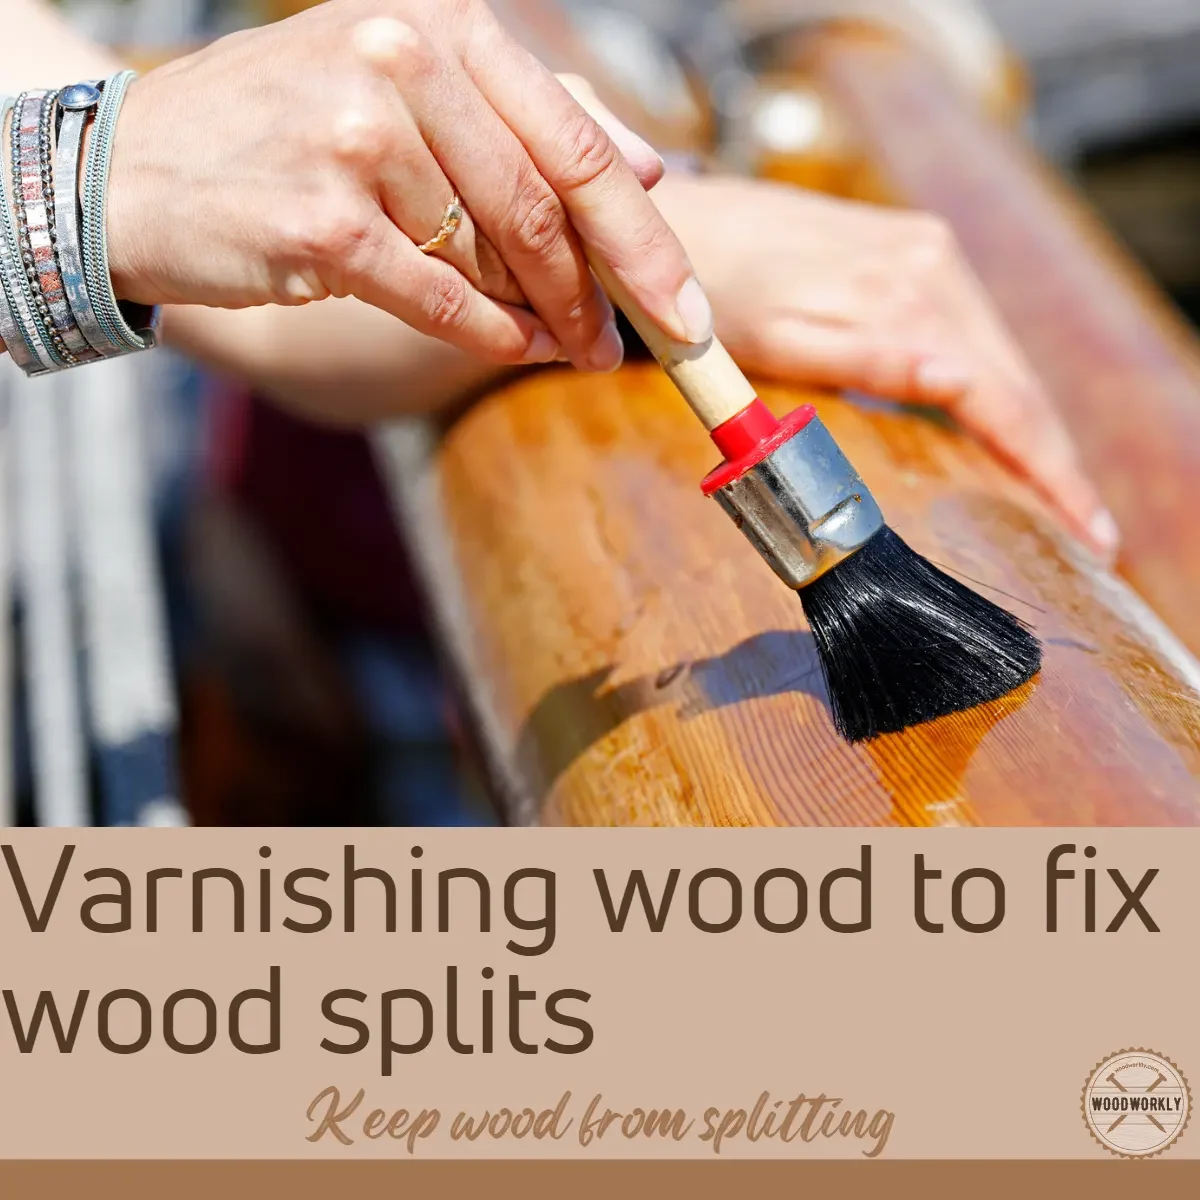 Varnishing wood to fix wood splits